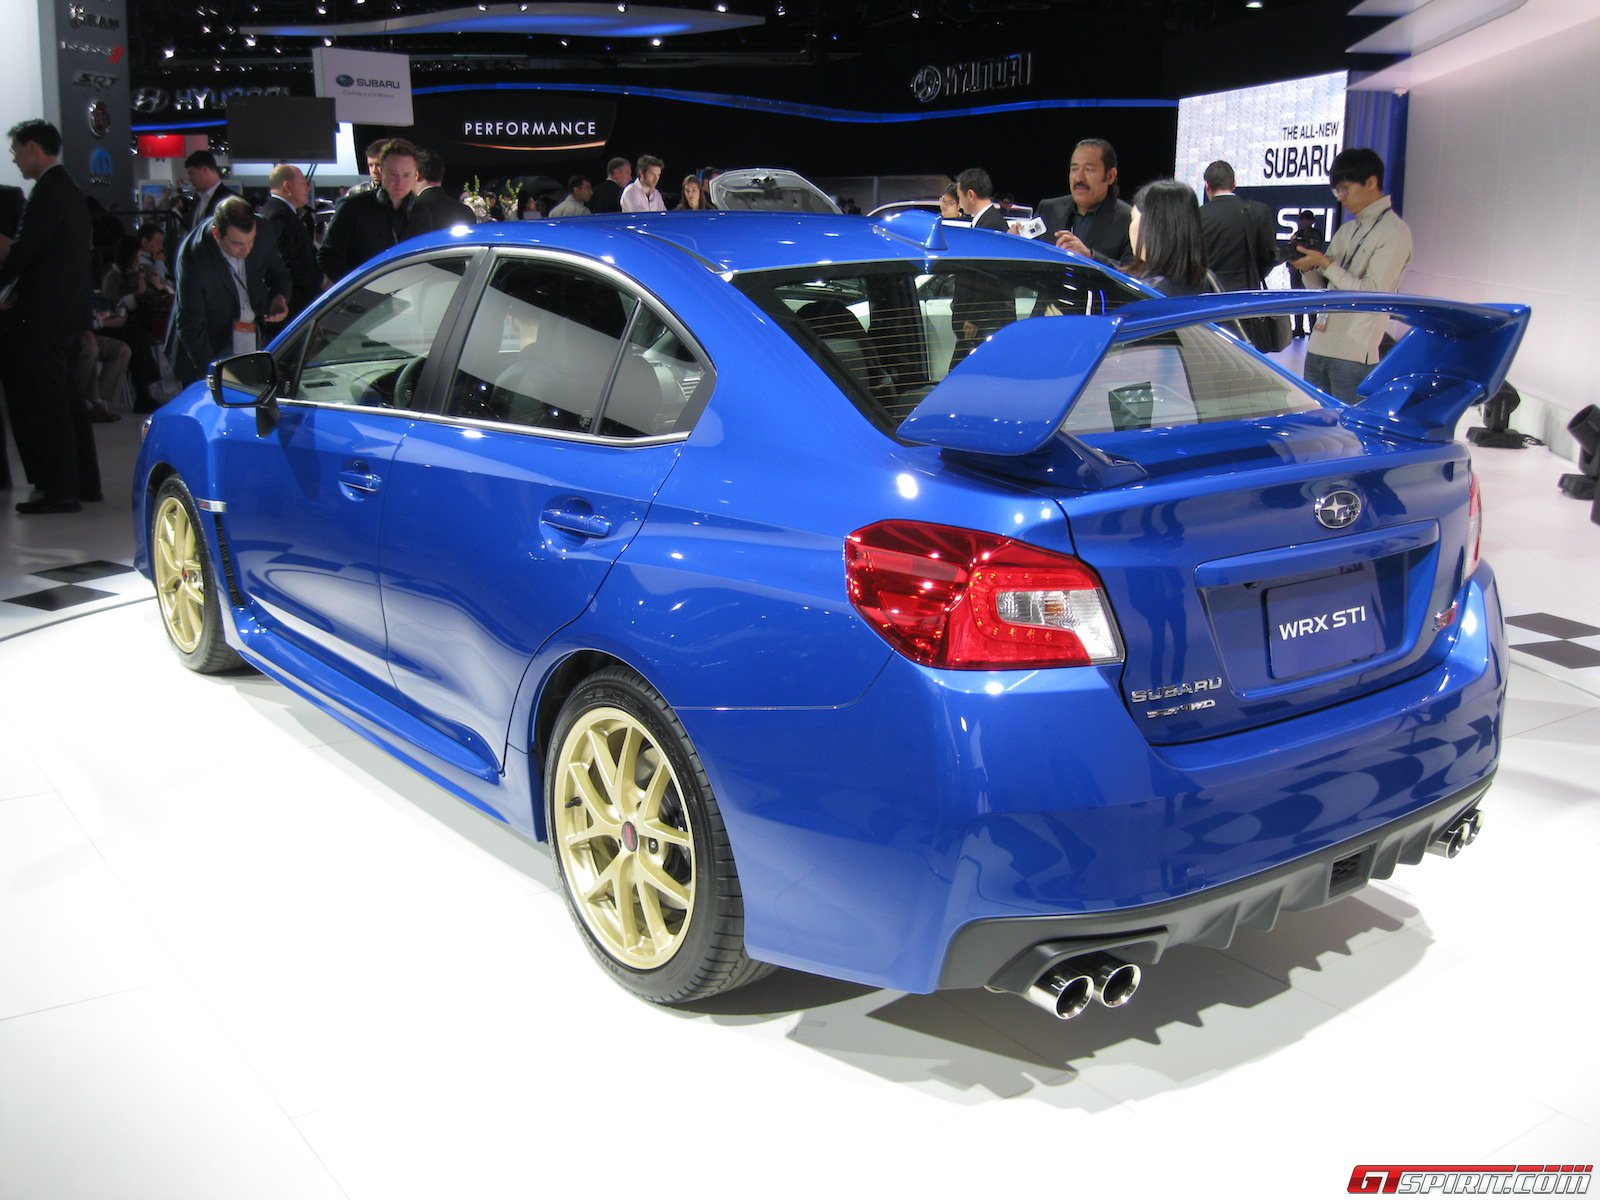 Detroit 2014 Subaru WRX STI GTspirit